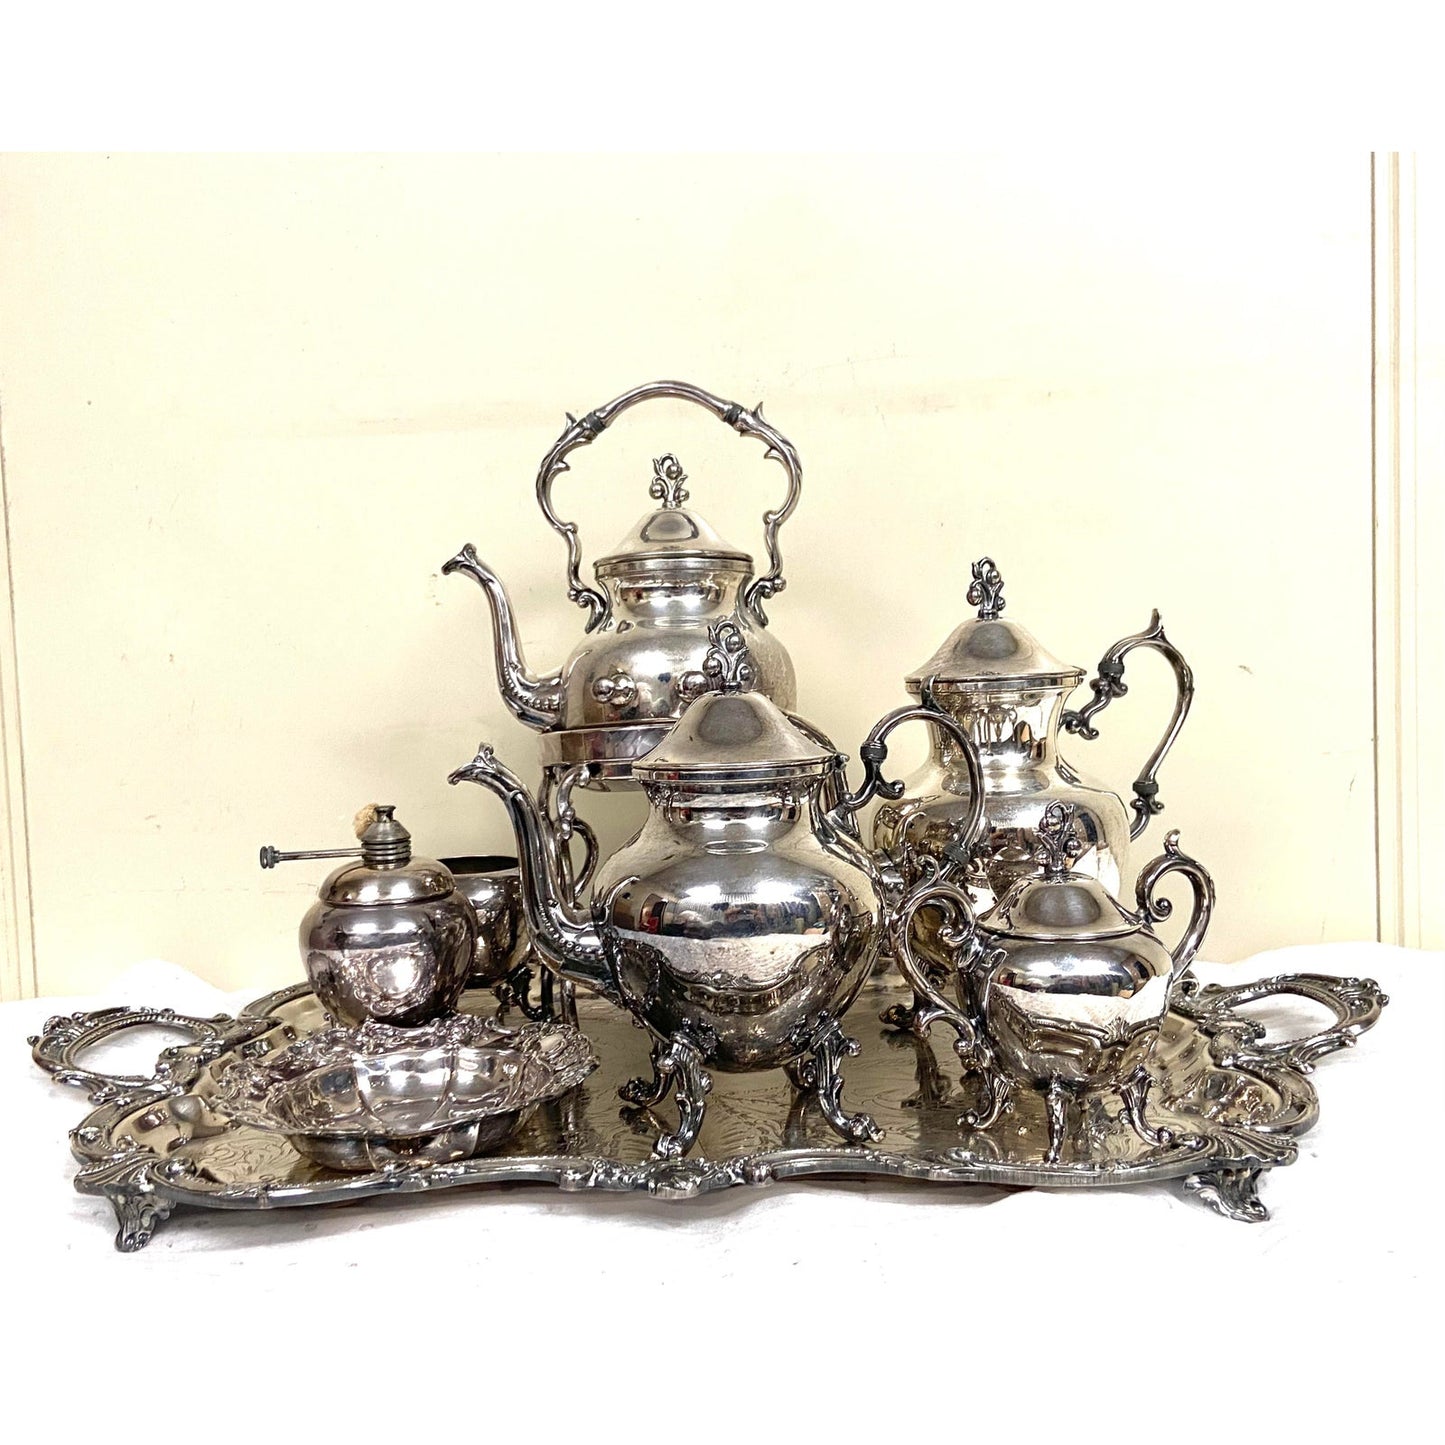 [ON HOLD] Vintage Victorian Silver Tea Service Set - 14 Piece